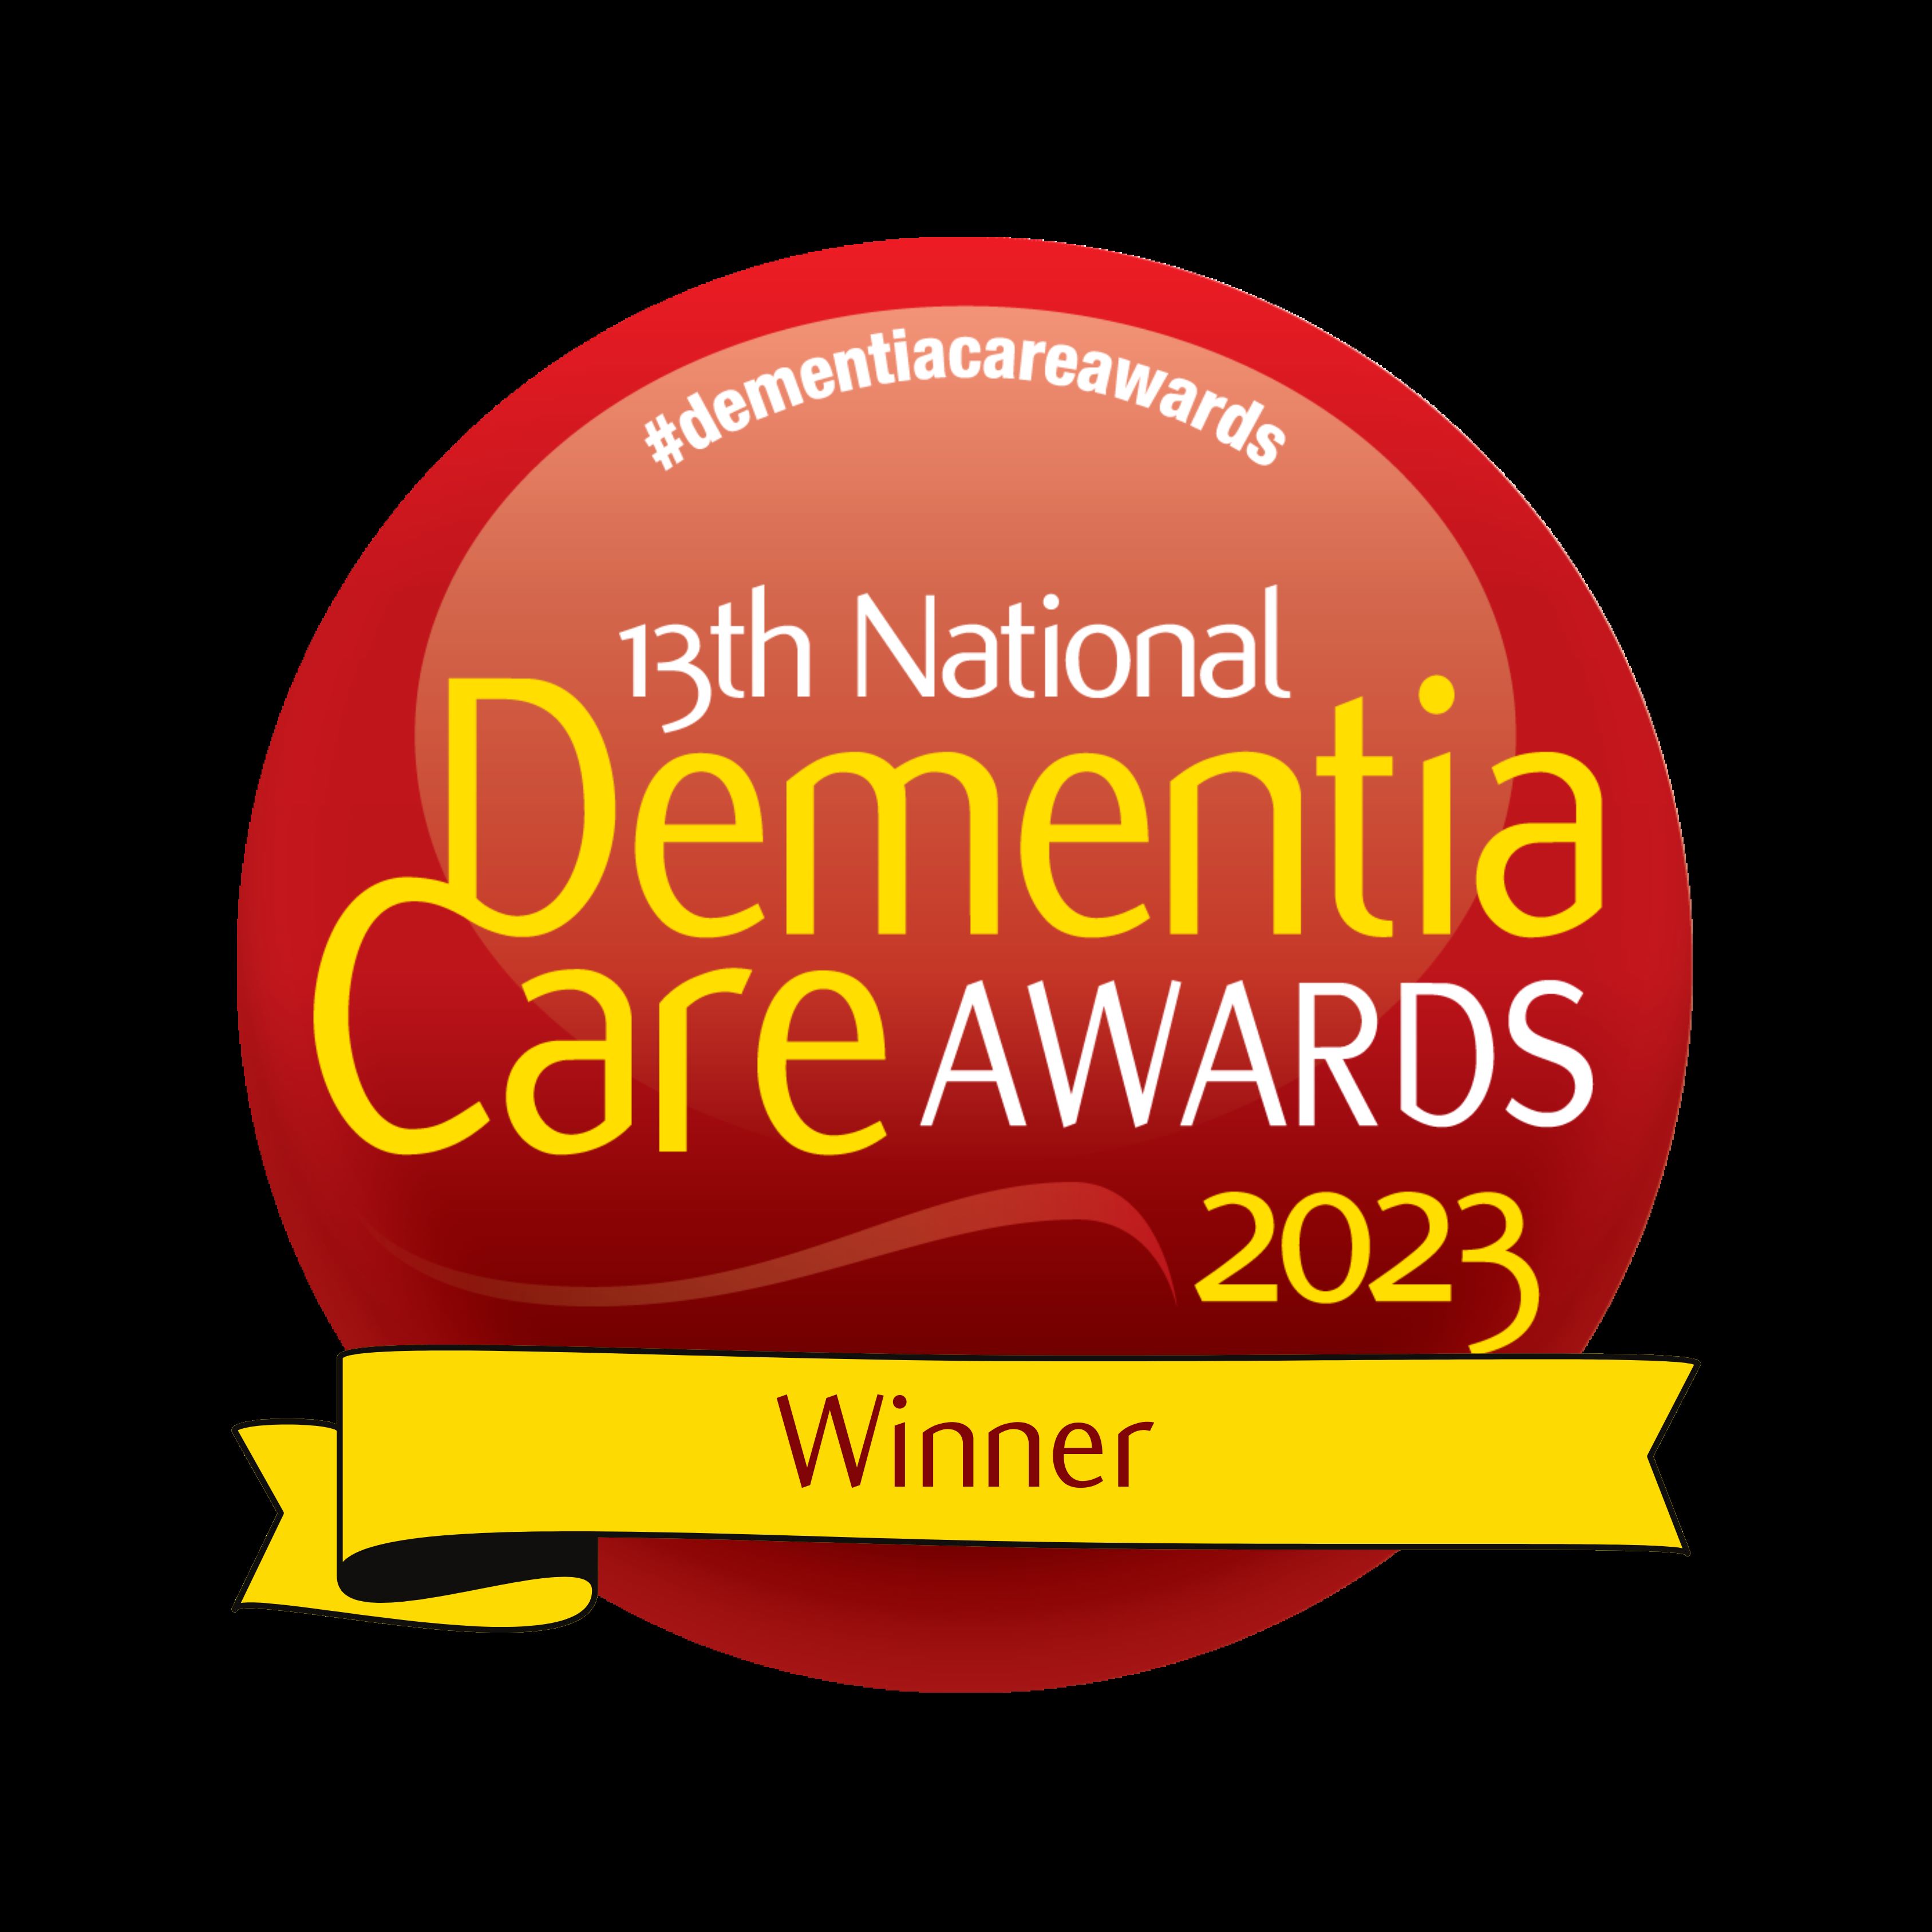 Dementia Care Awards 2023